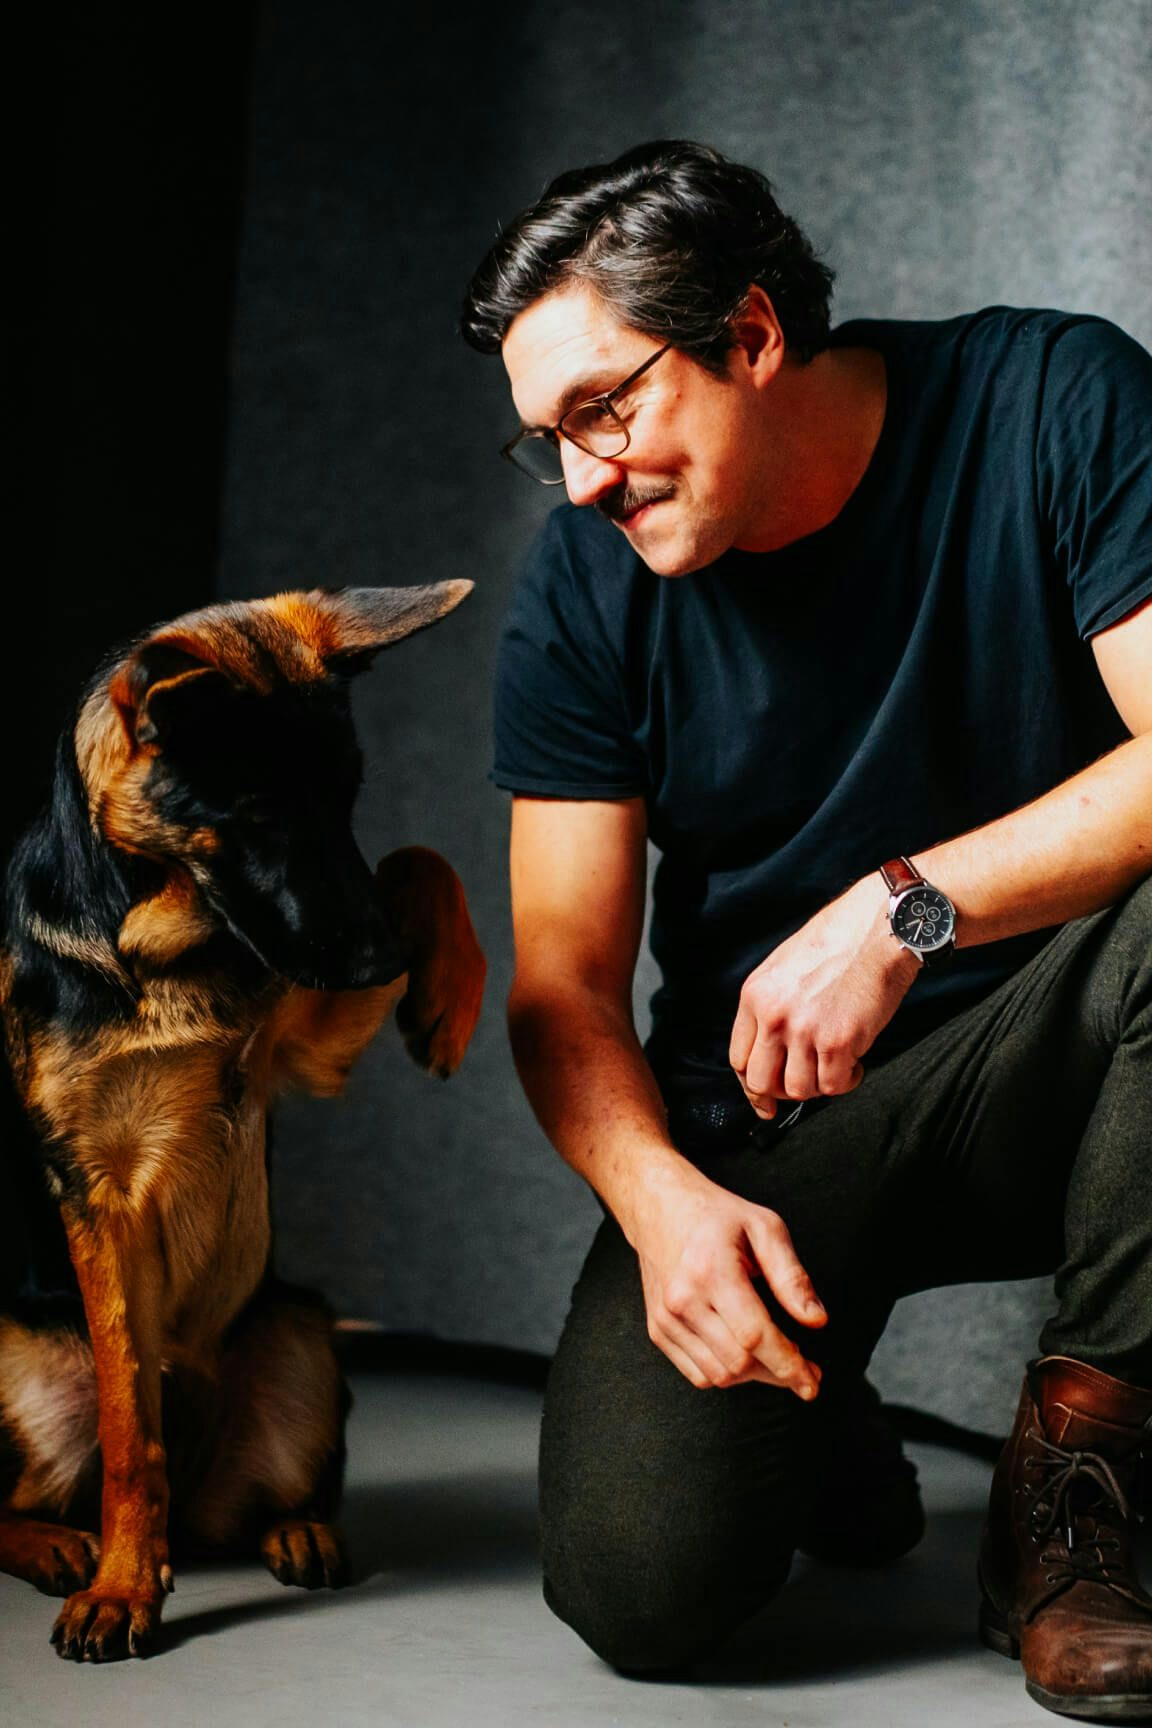 Göran with his dog Hiro